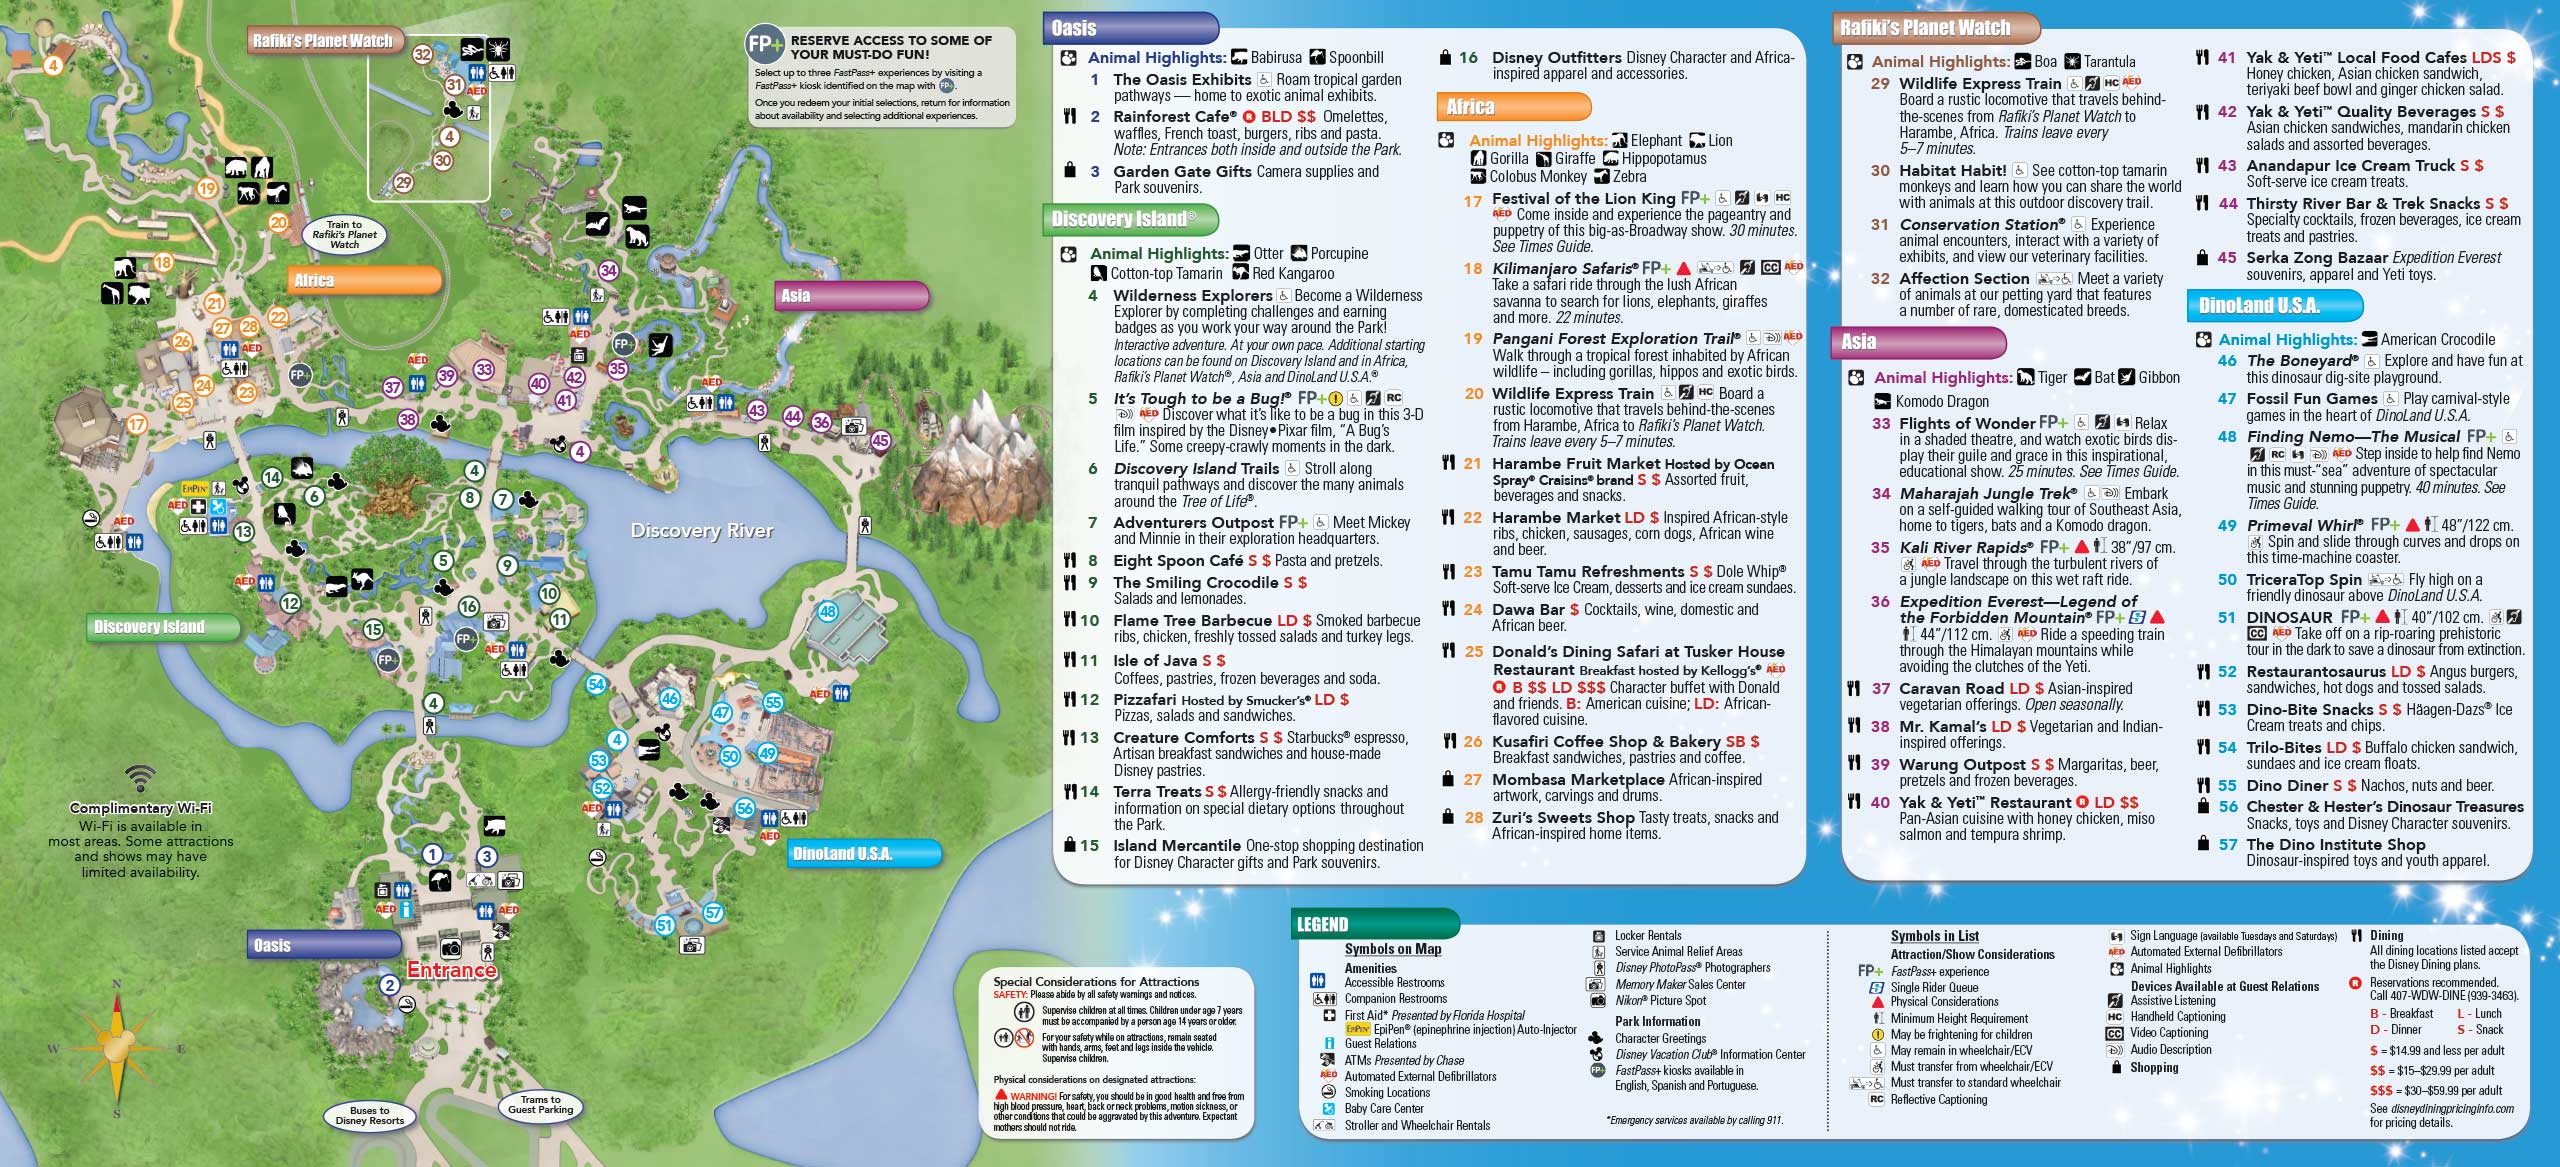 January 2016 Walt Disney World Park Maps Photo 2 Of 12